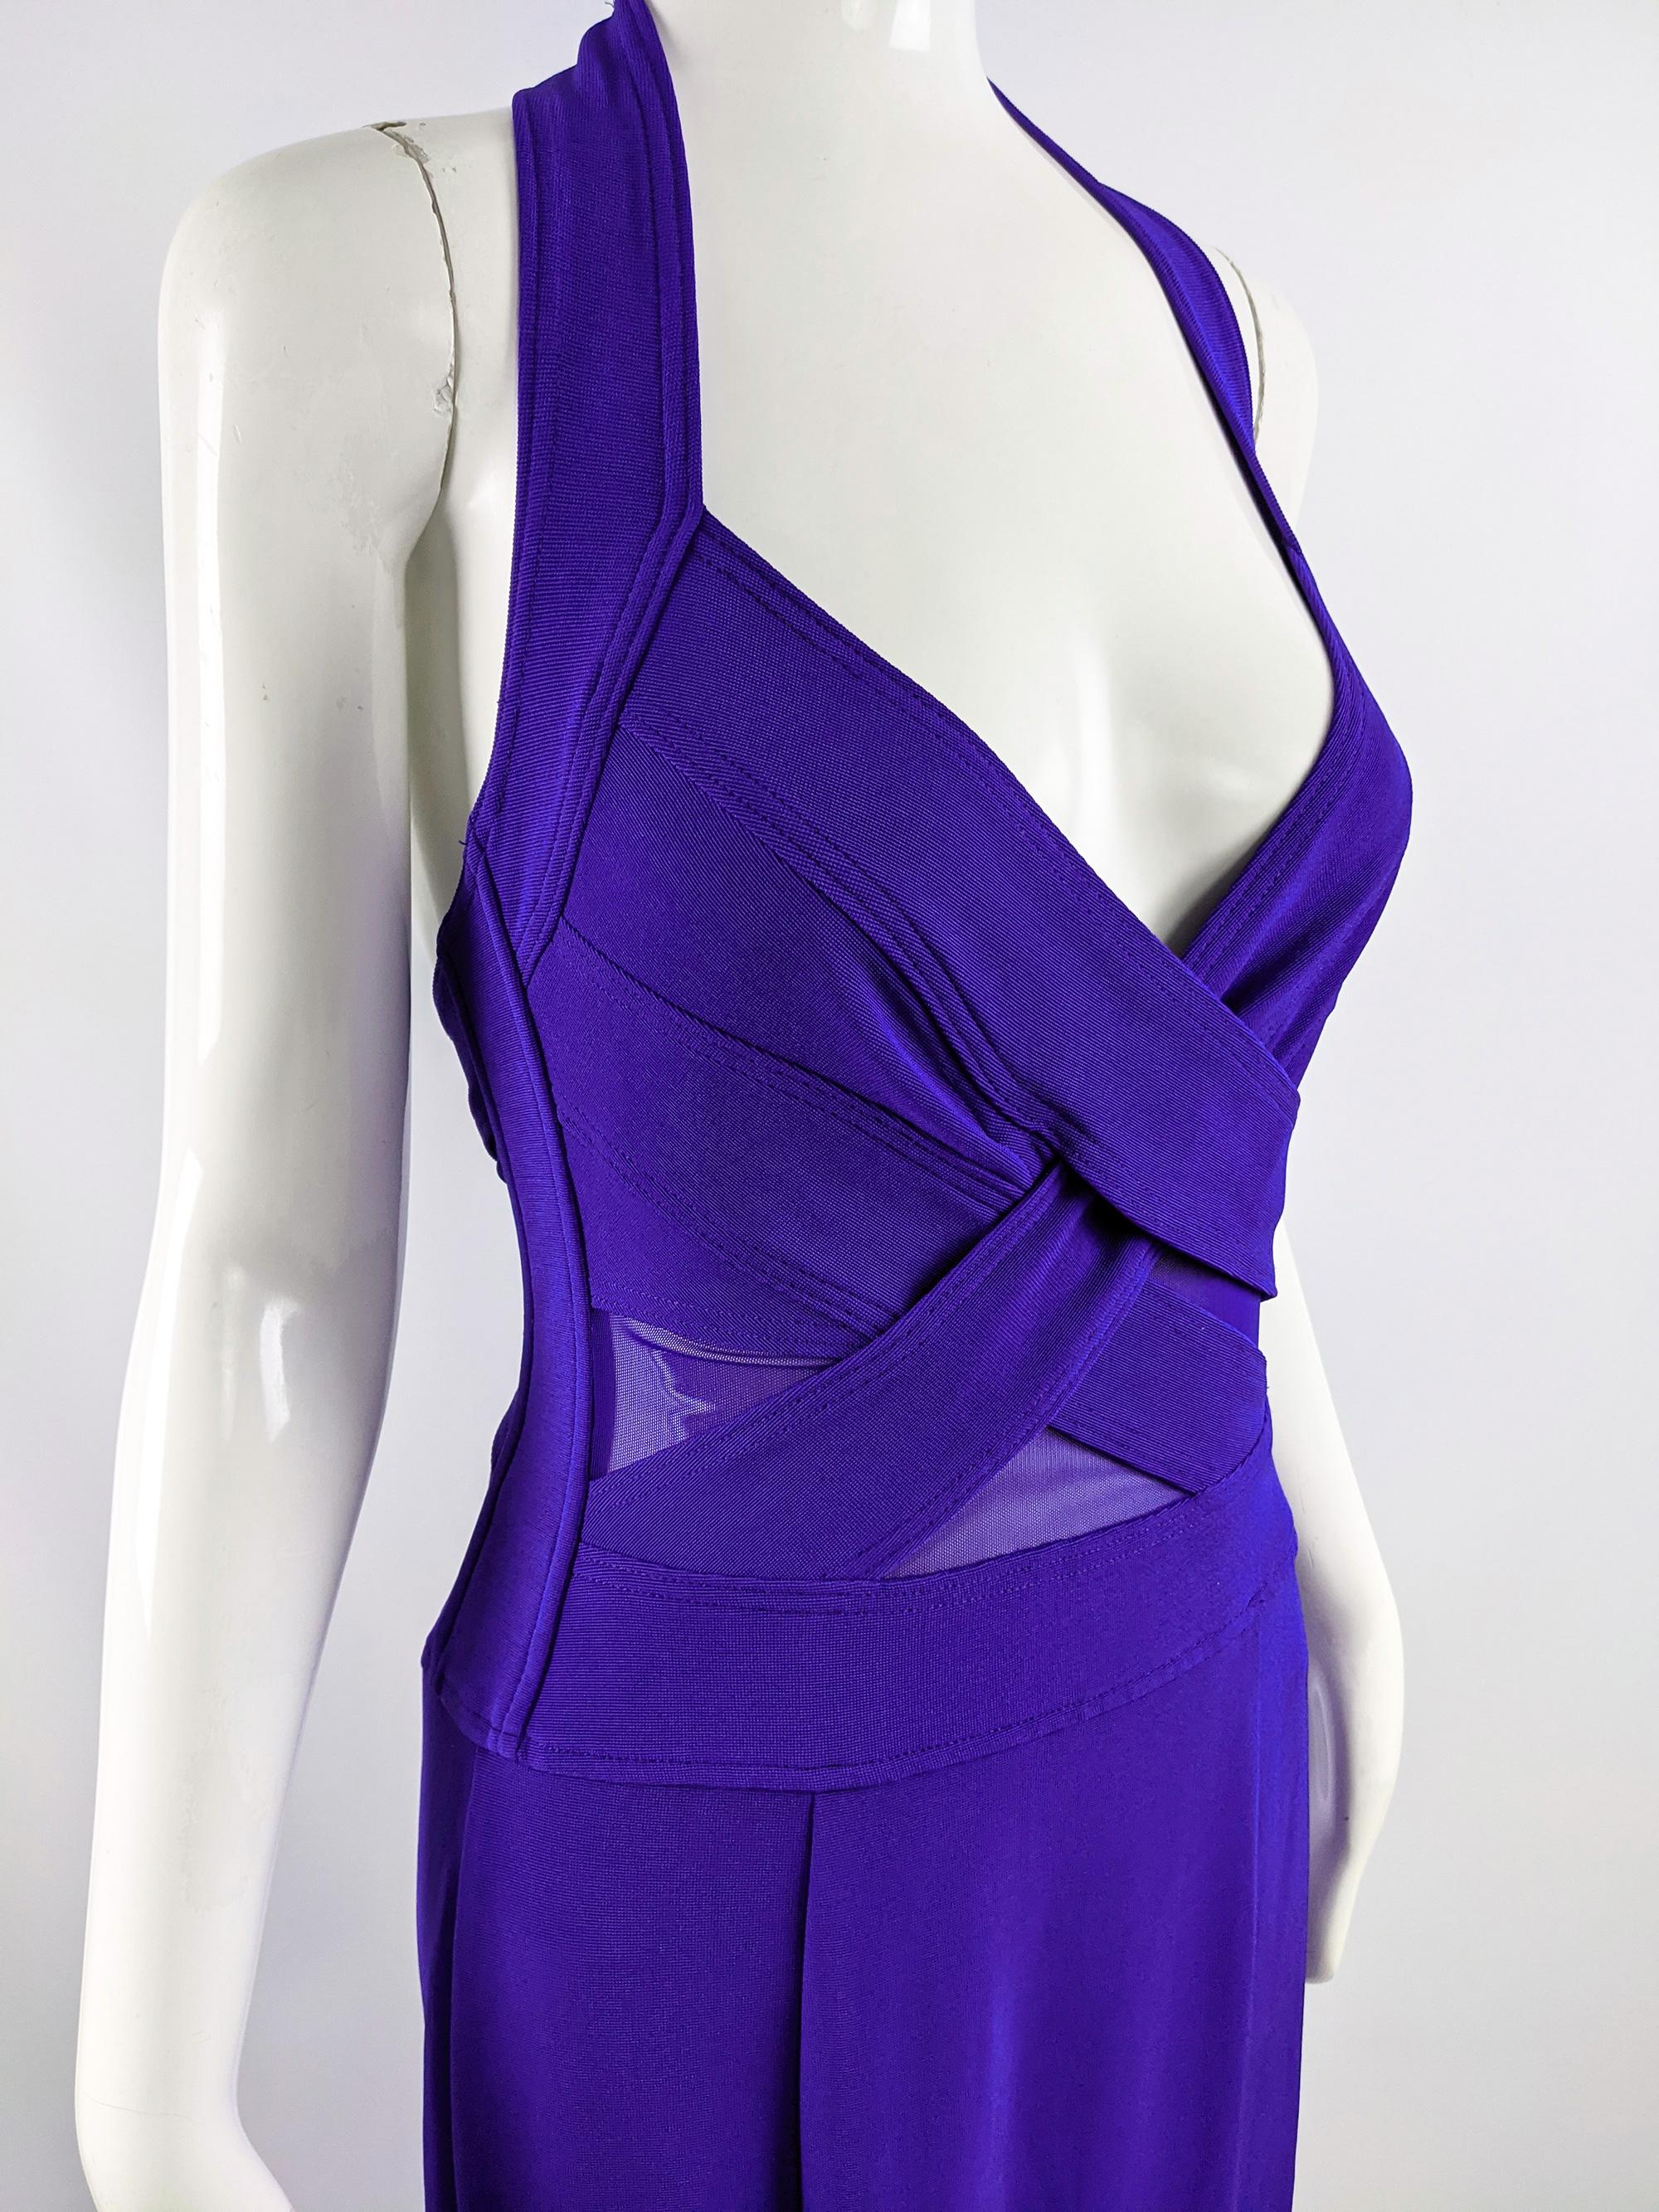 Tadashi Shoji Vintage Purple Stretch Sheer Cut Out Mesh Evening Dress, 1990s For Sale 2